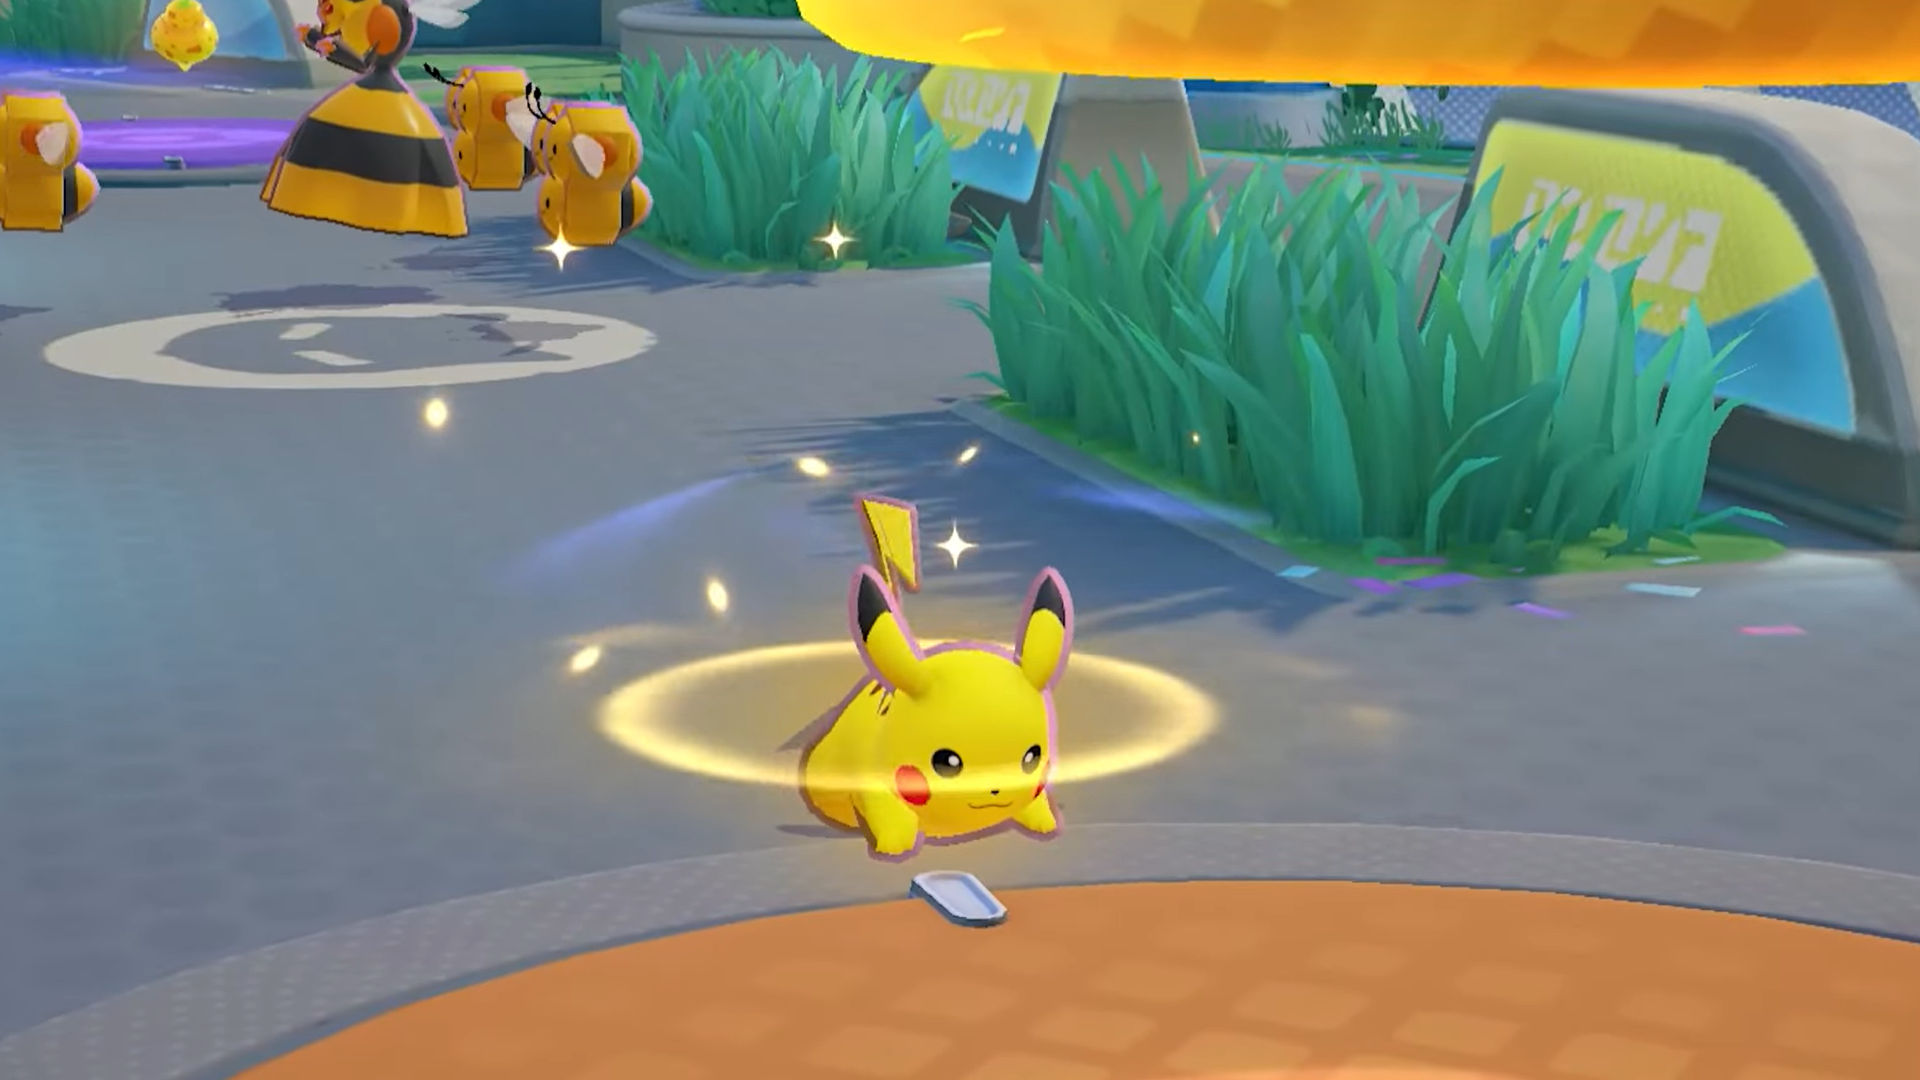 Pokémon Unite Pikachu build, abilities, and items